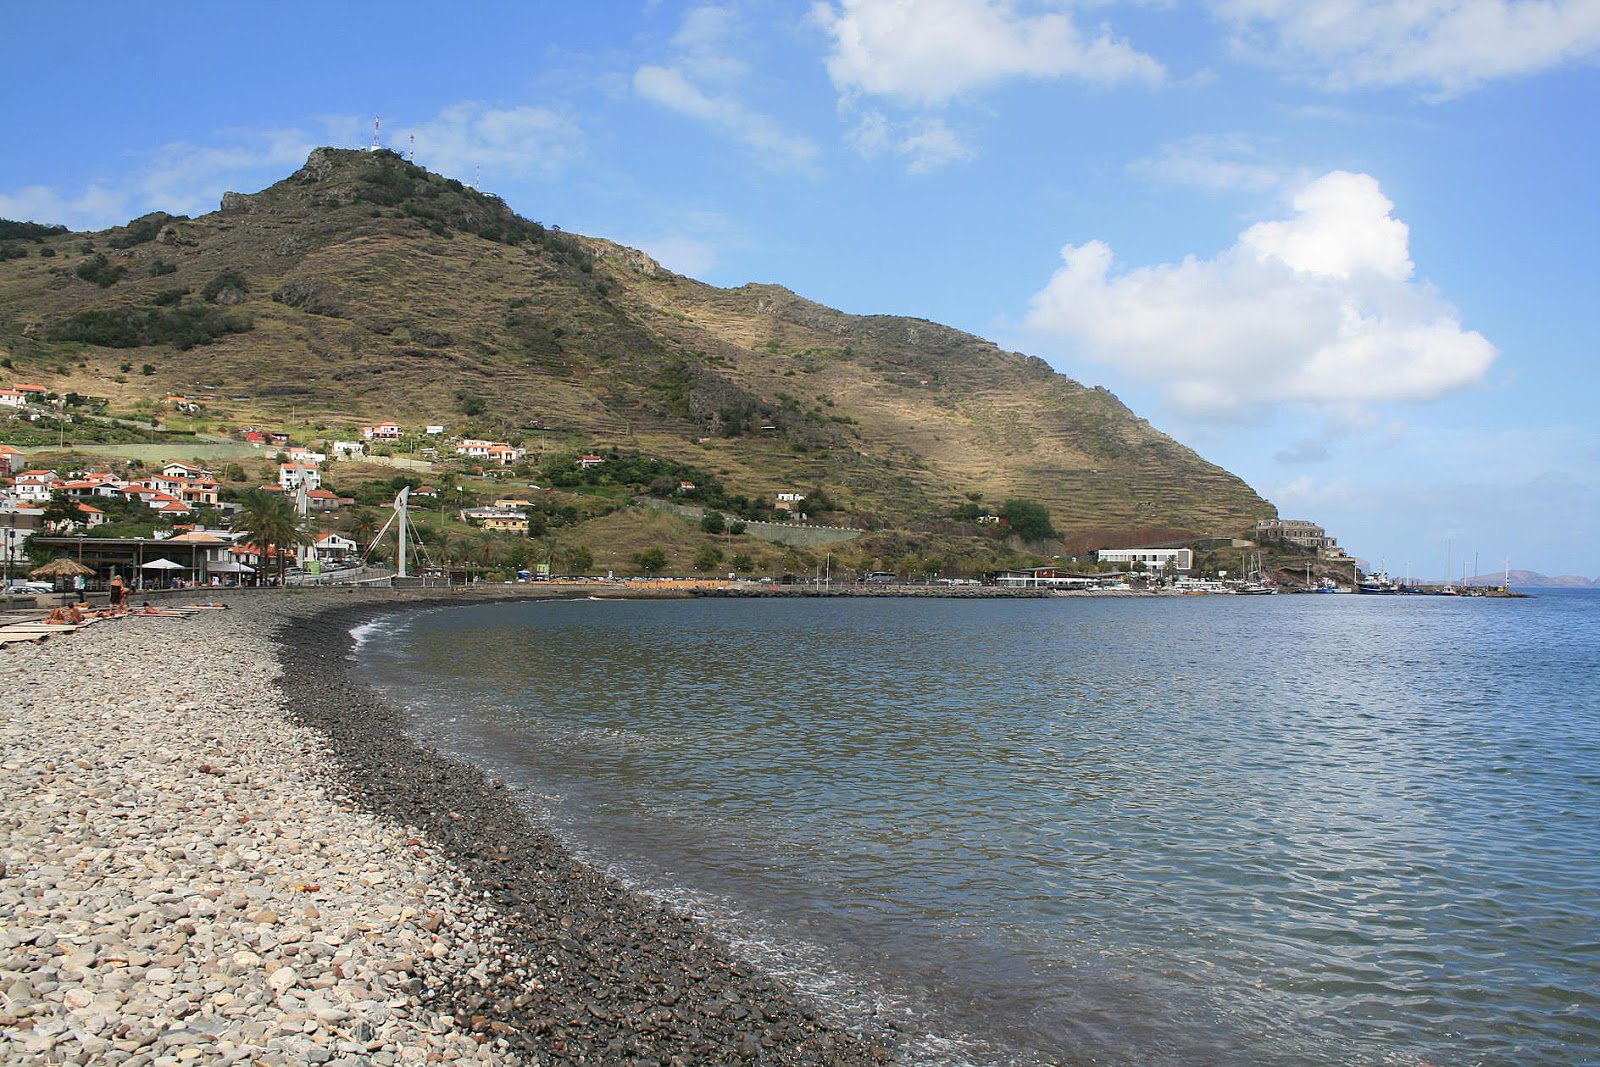 Photo of Praia de S. Roque with gray pebble surface